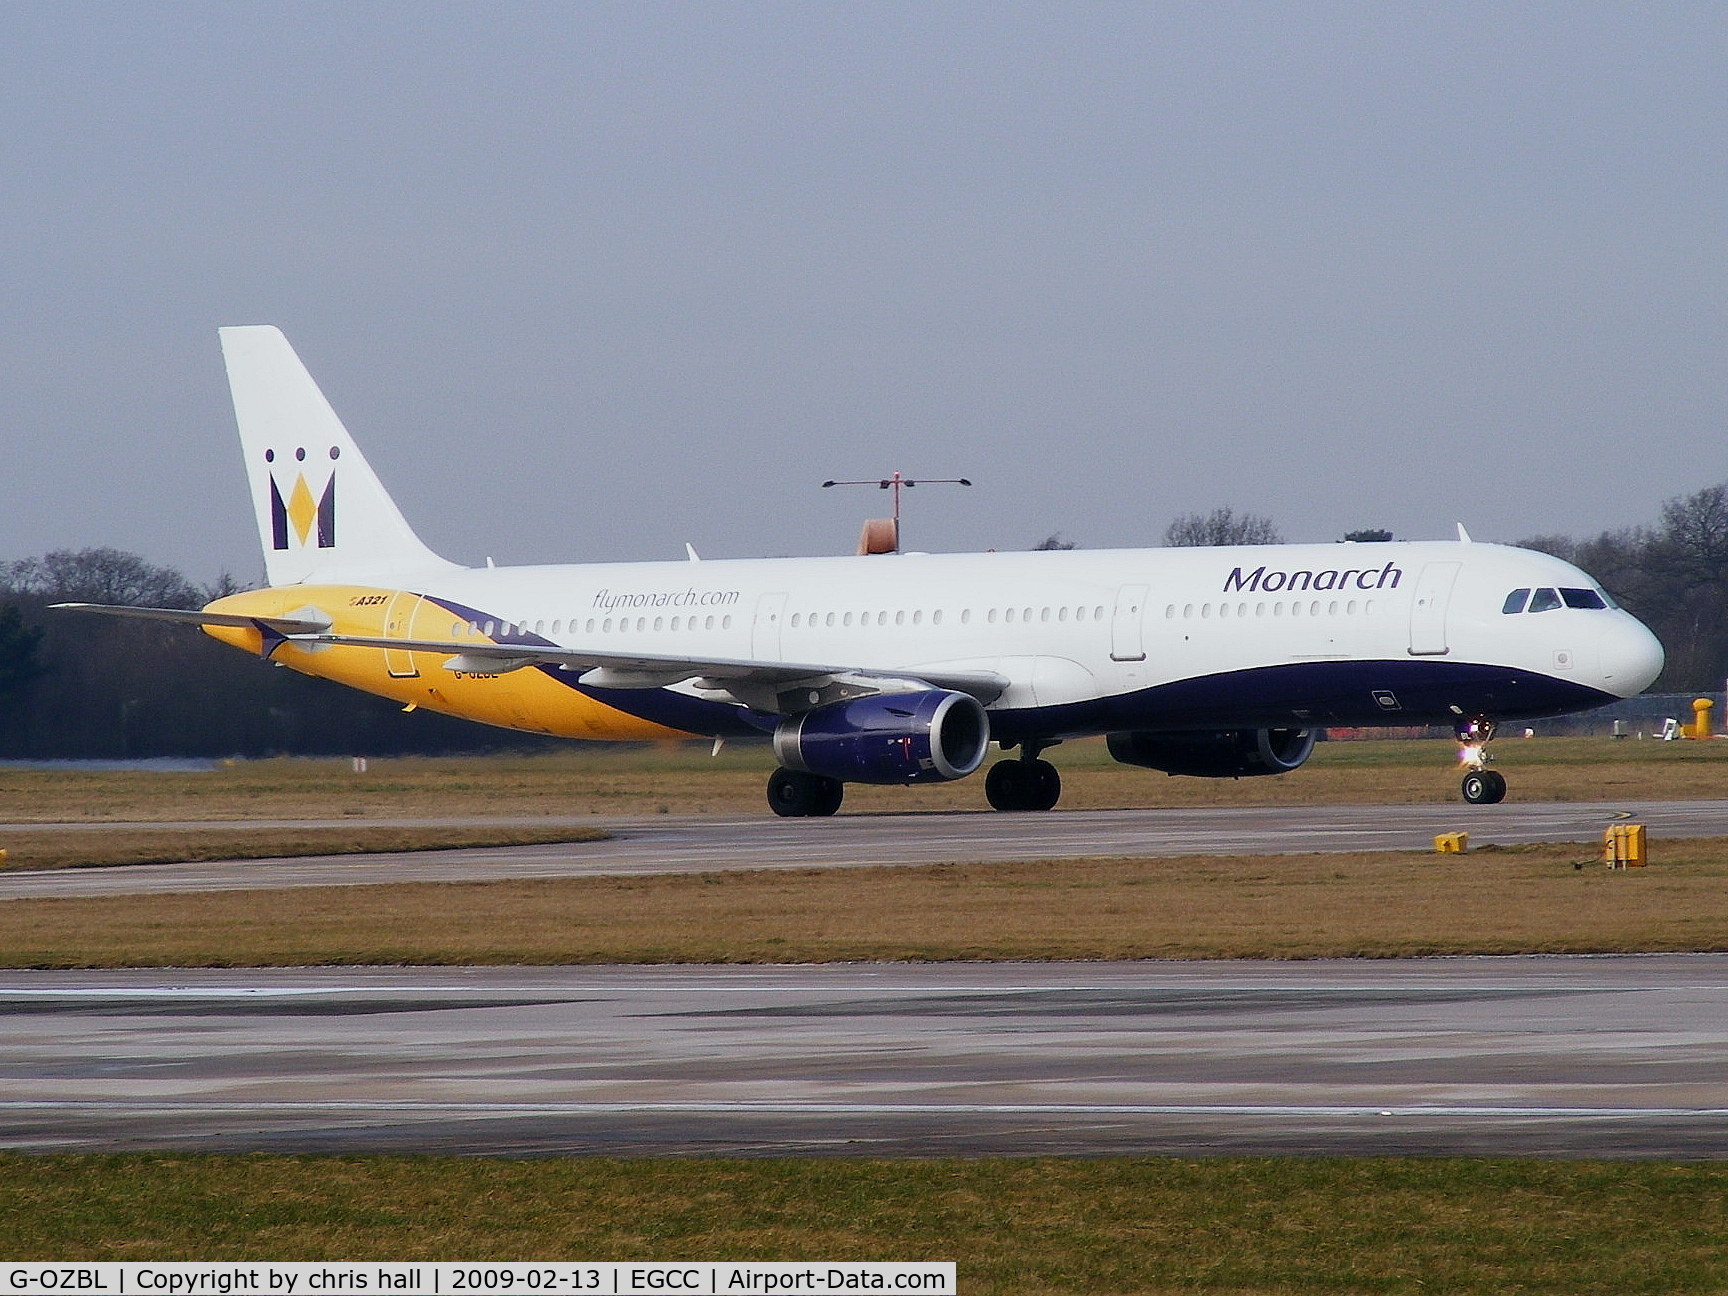 G-OZBL, 1998 Airbus A321-231 C/N 864, Monarch